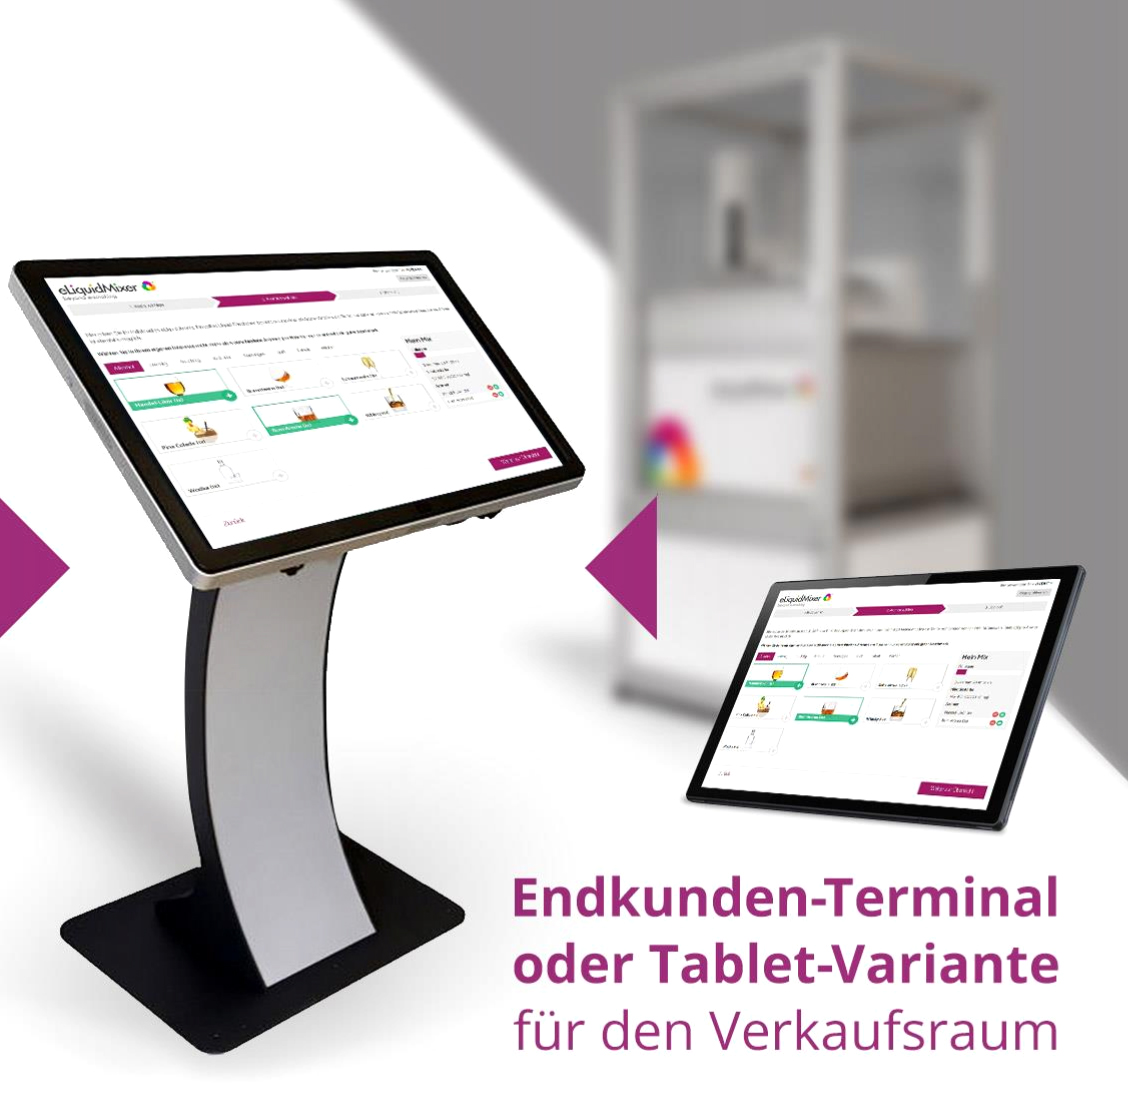 eLiquidMixer GmbH Endkunden Terminal easy pc stand kioskterminal aus dem Hause WES Systeme Electronic